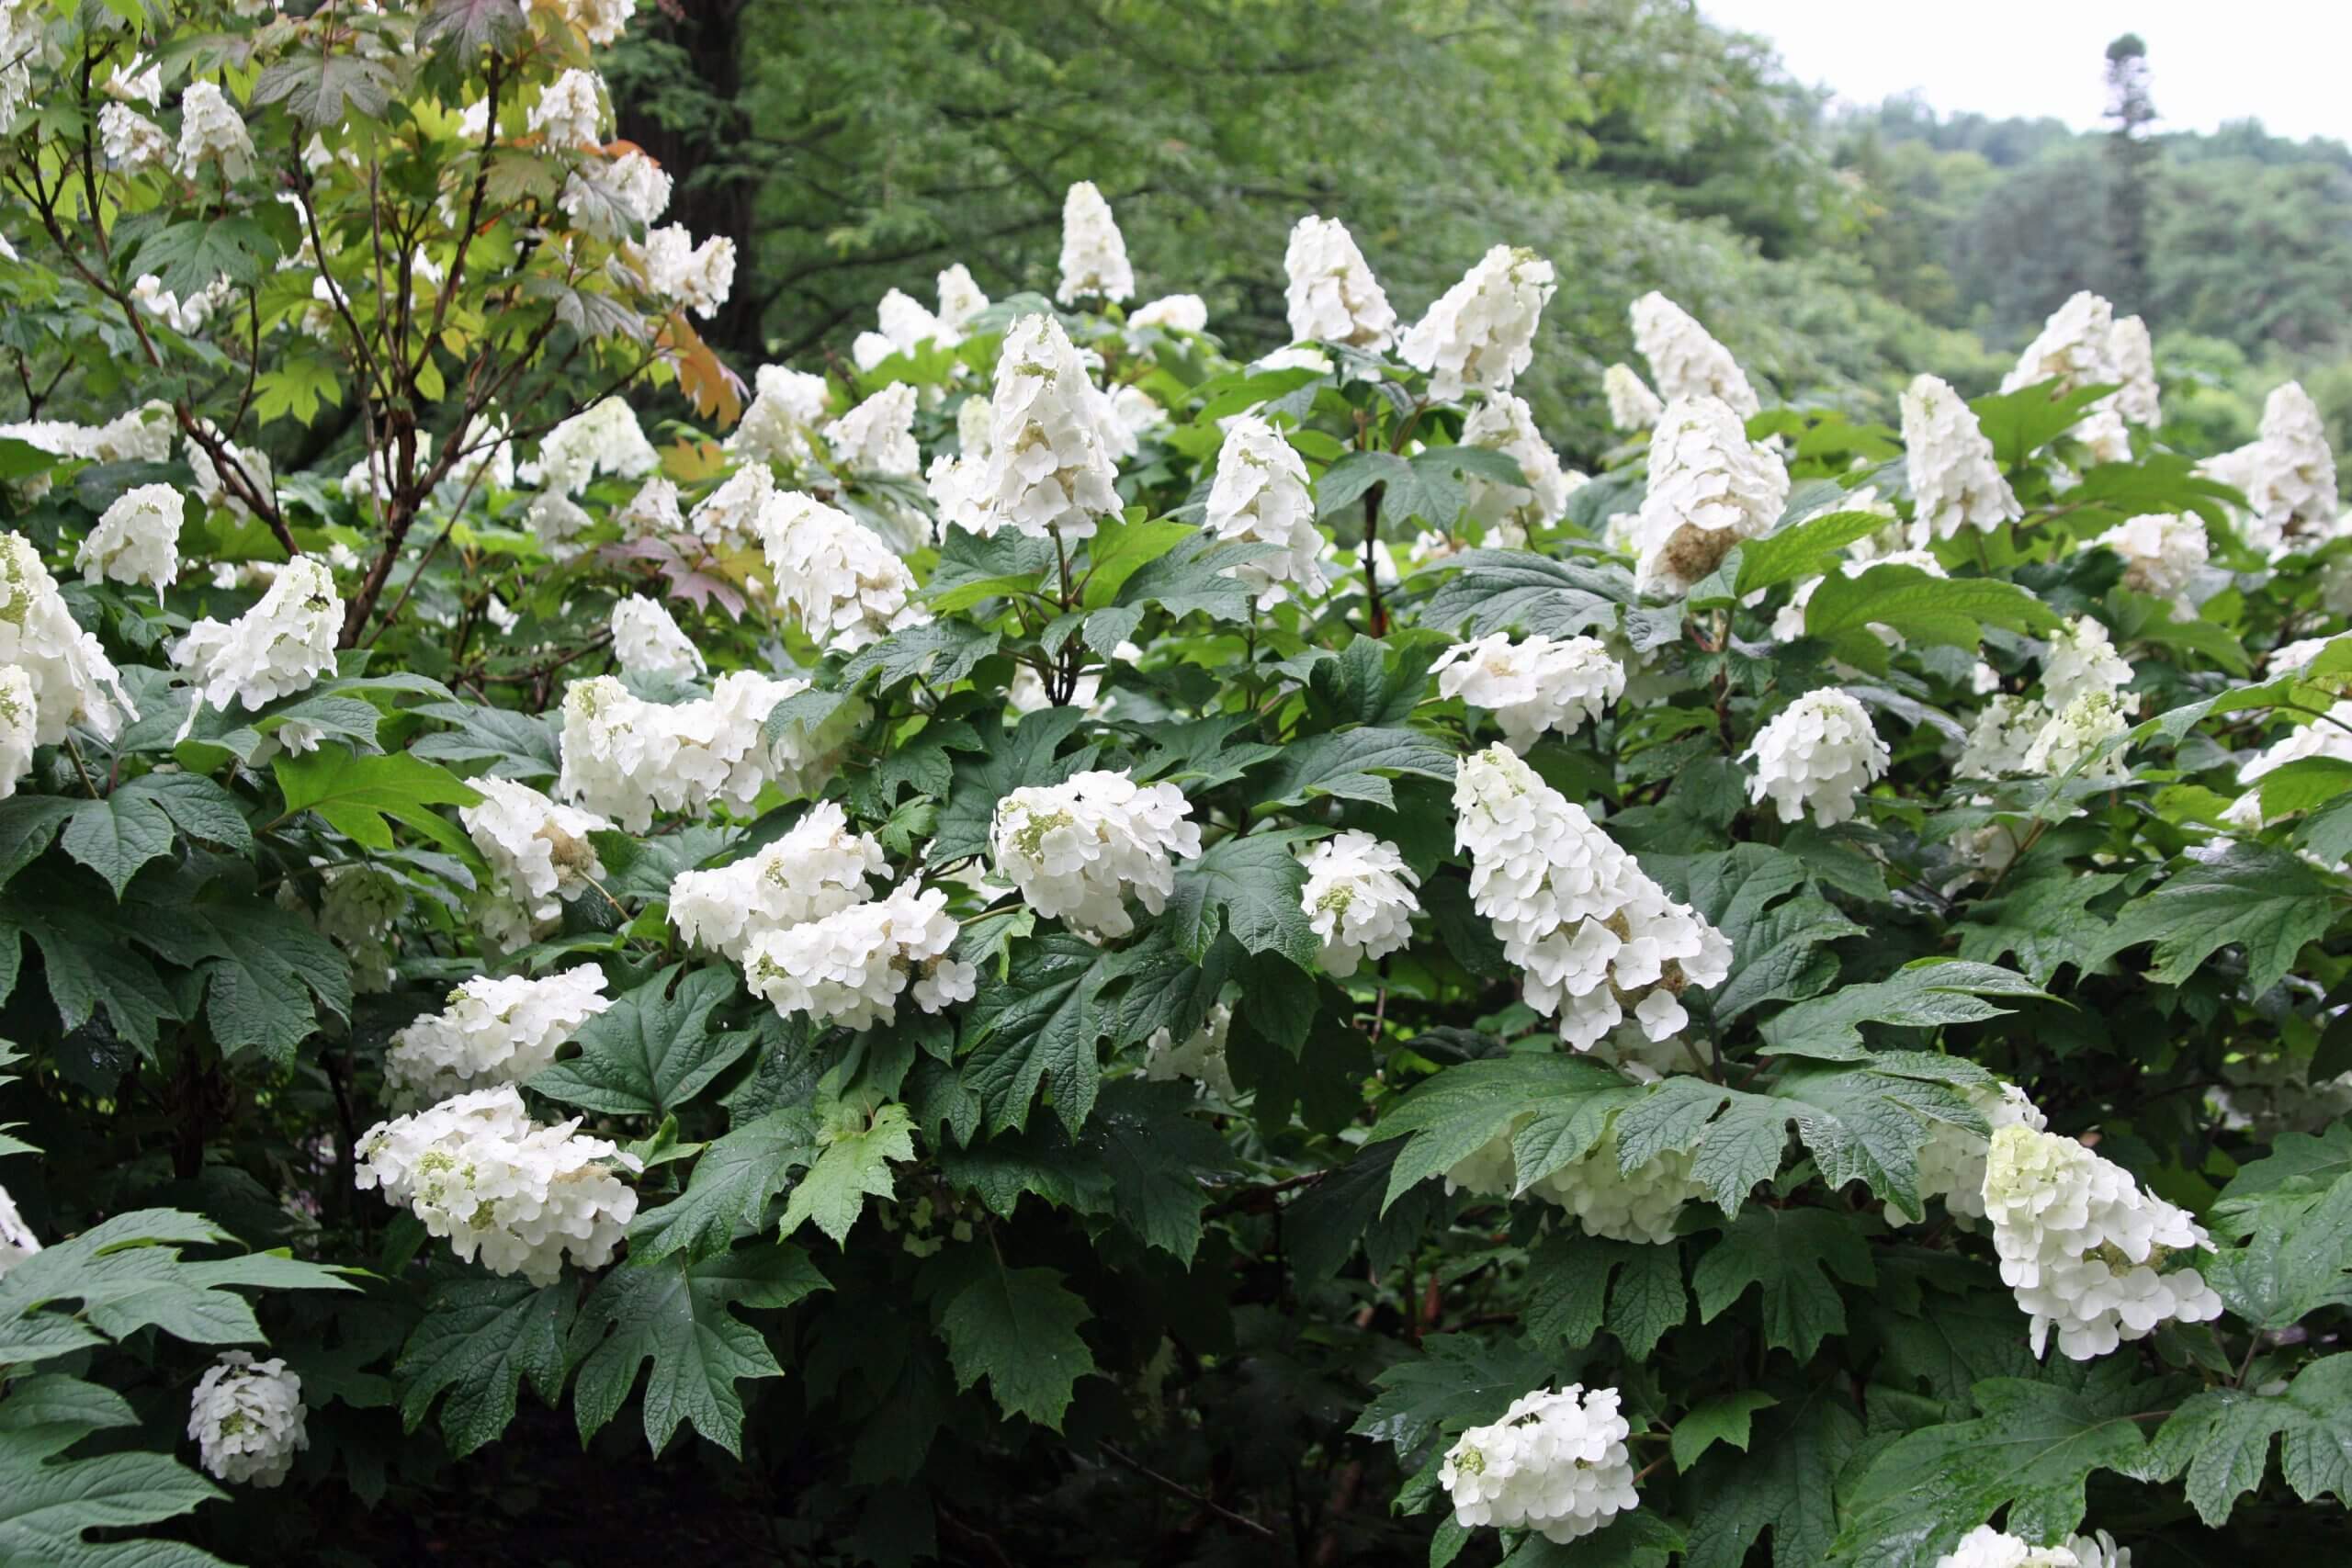 The brilliant white flowers of Snow Queen oakleaf hydrangea will brighten any summer garden, day or night.